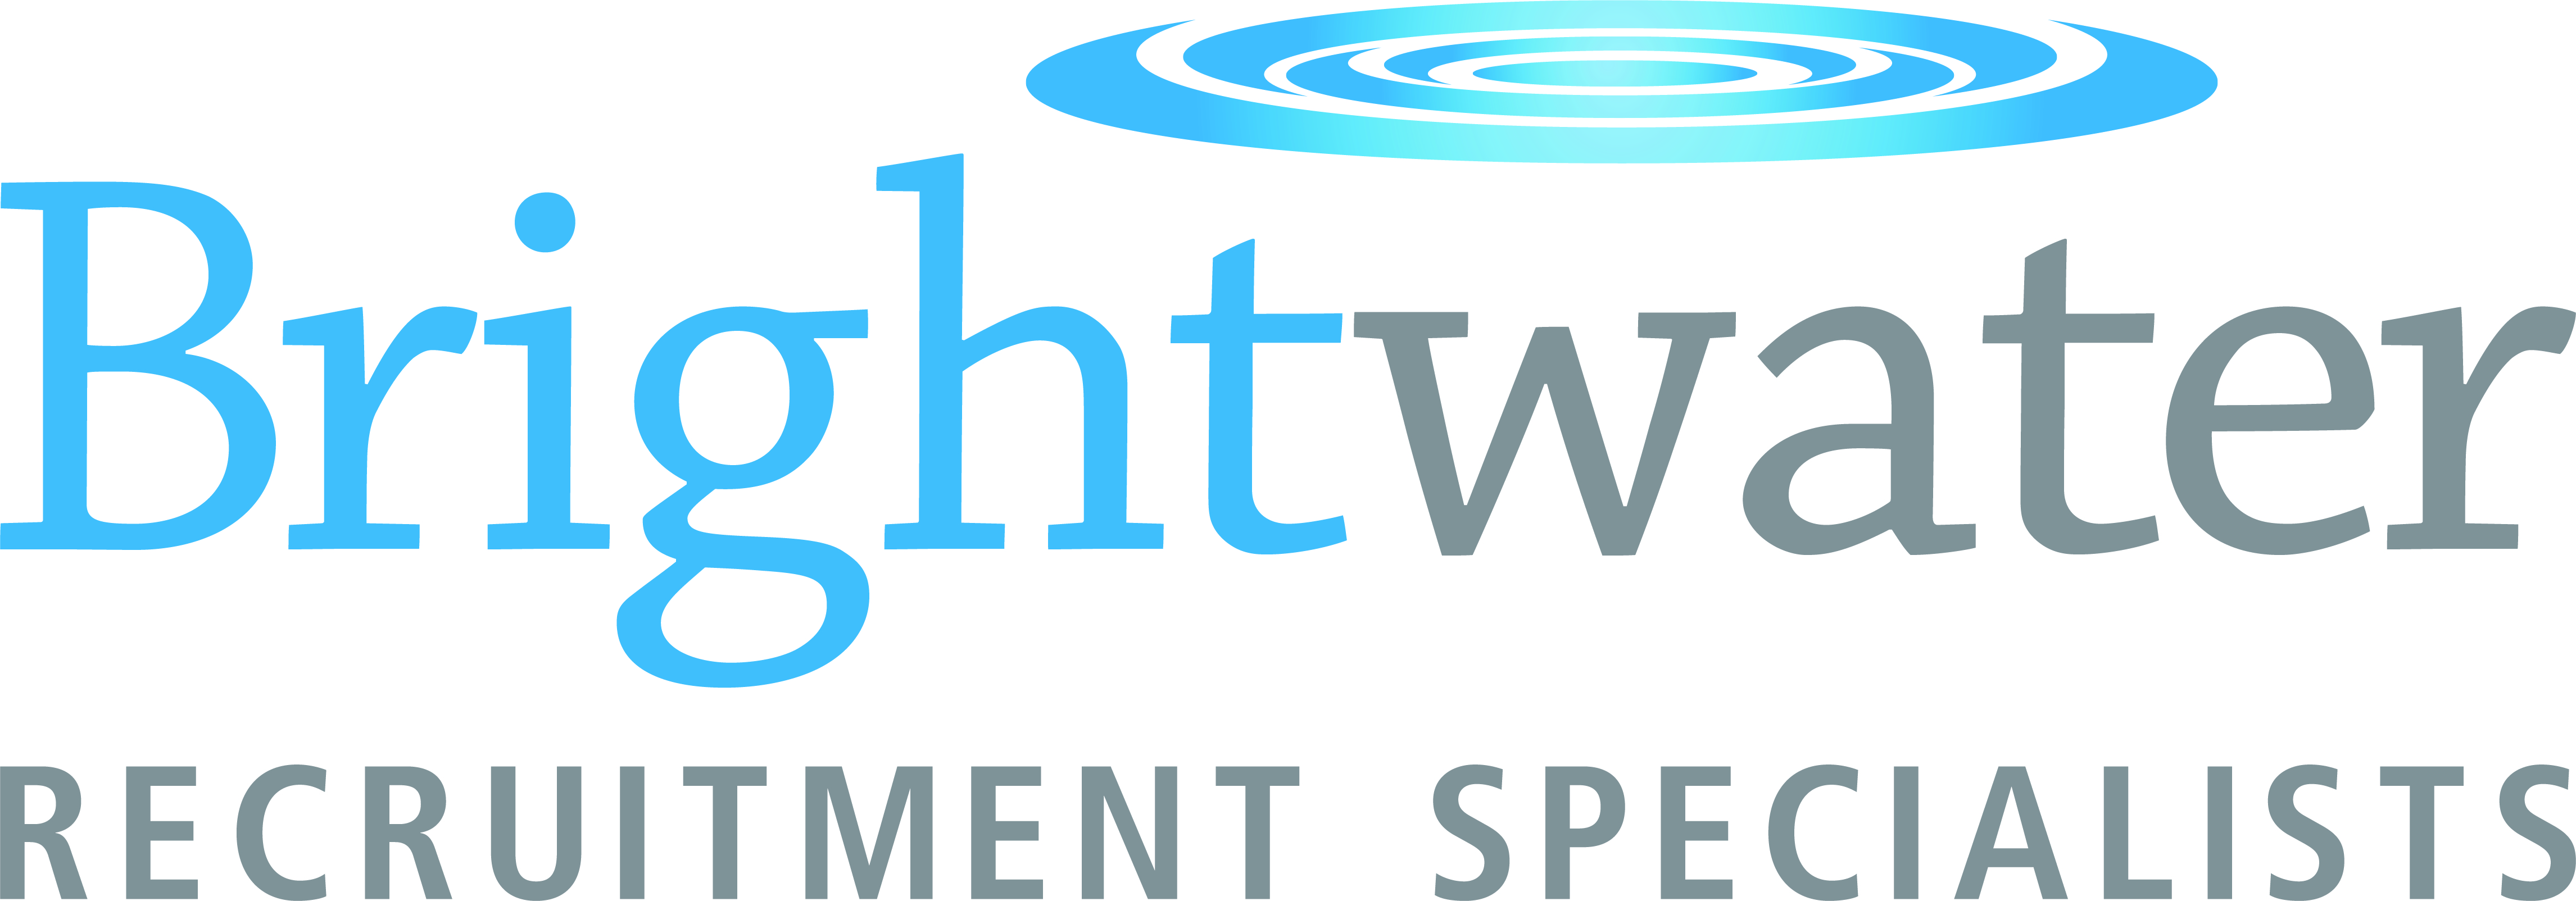 Brightwater Recruitment Consultants